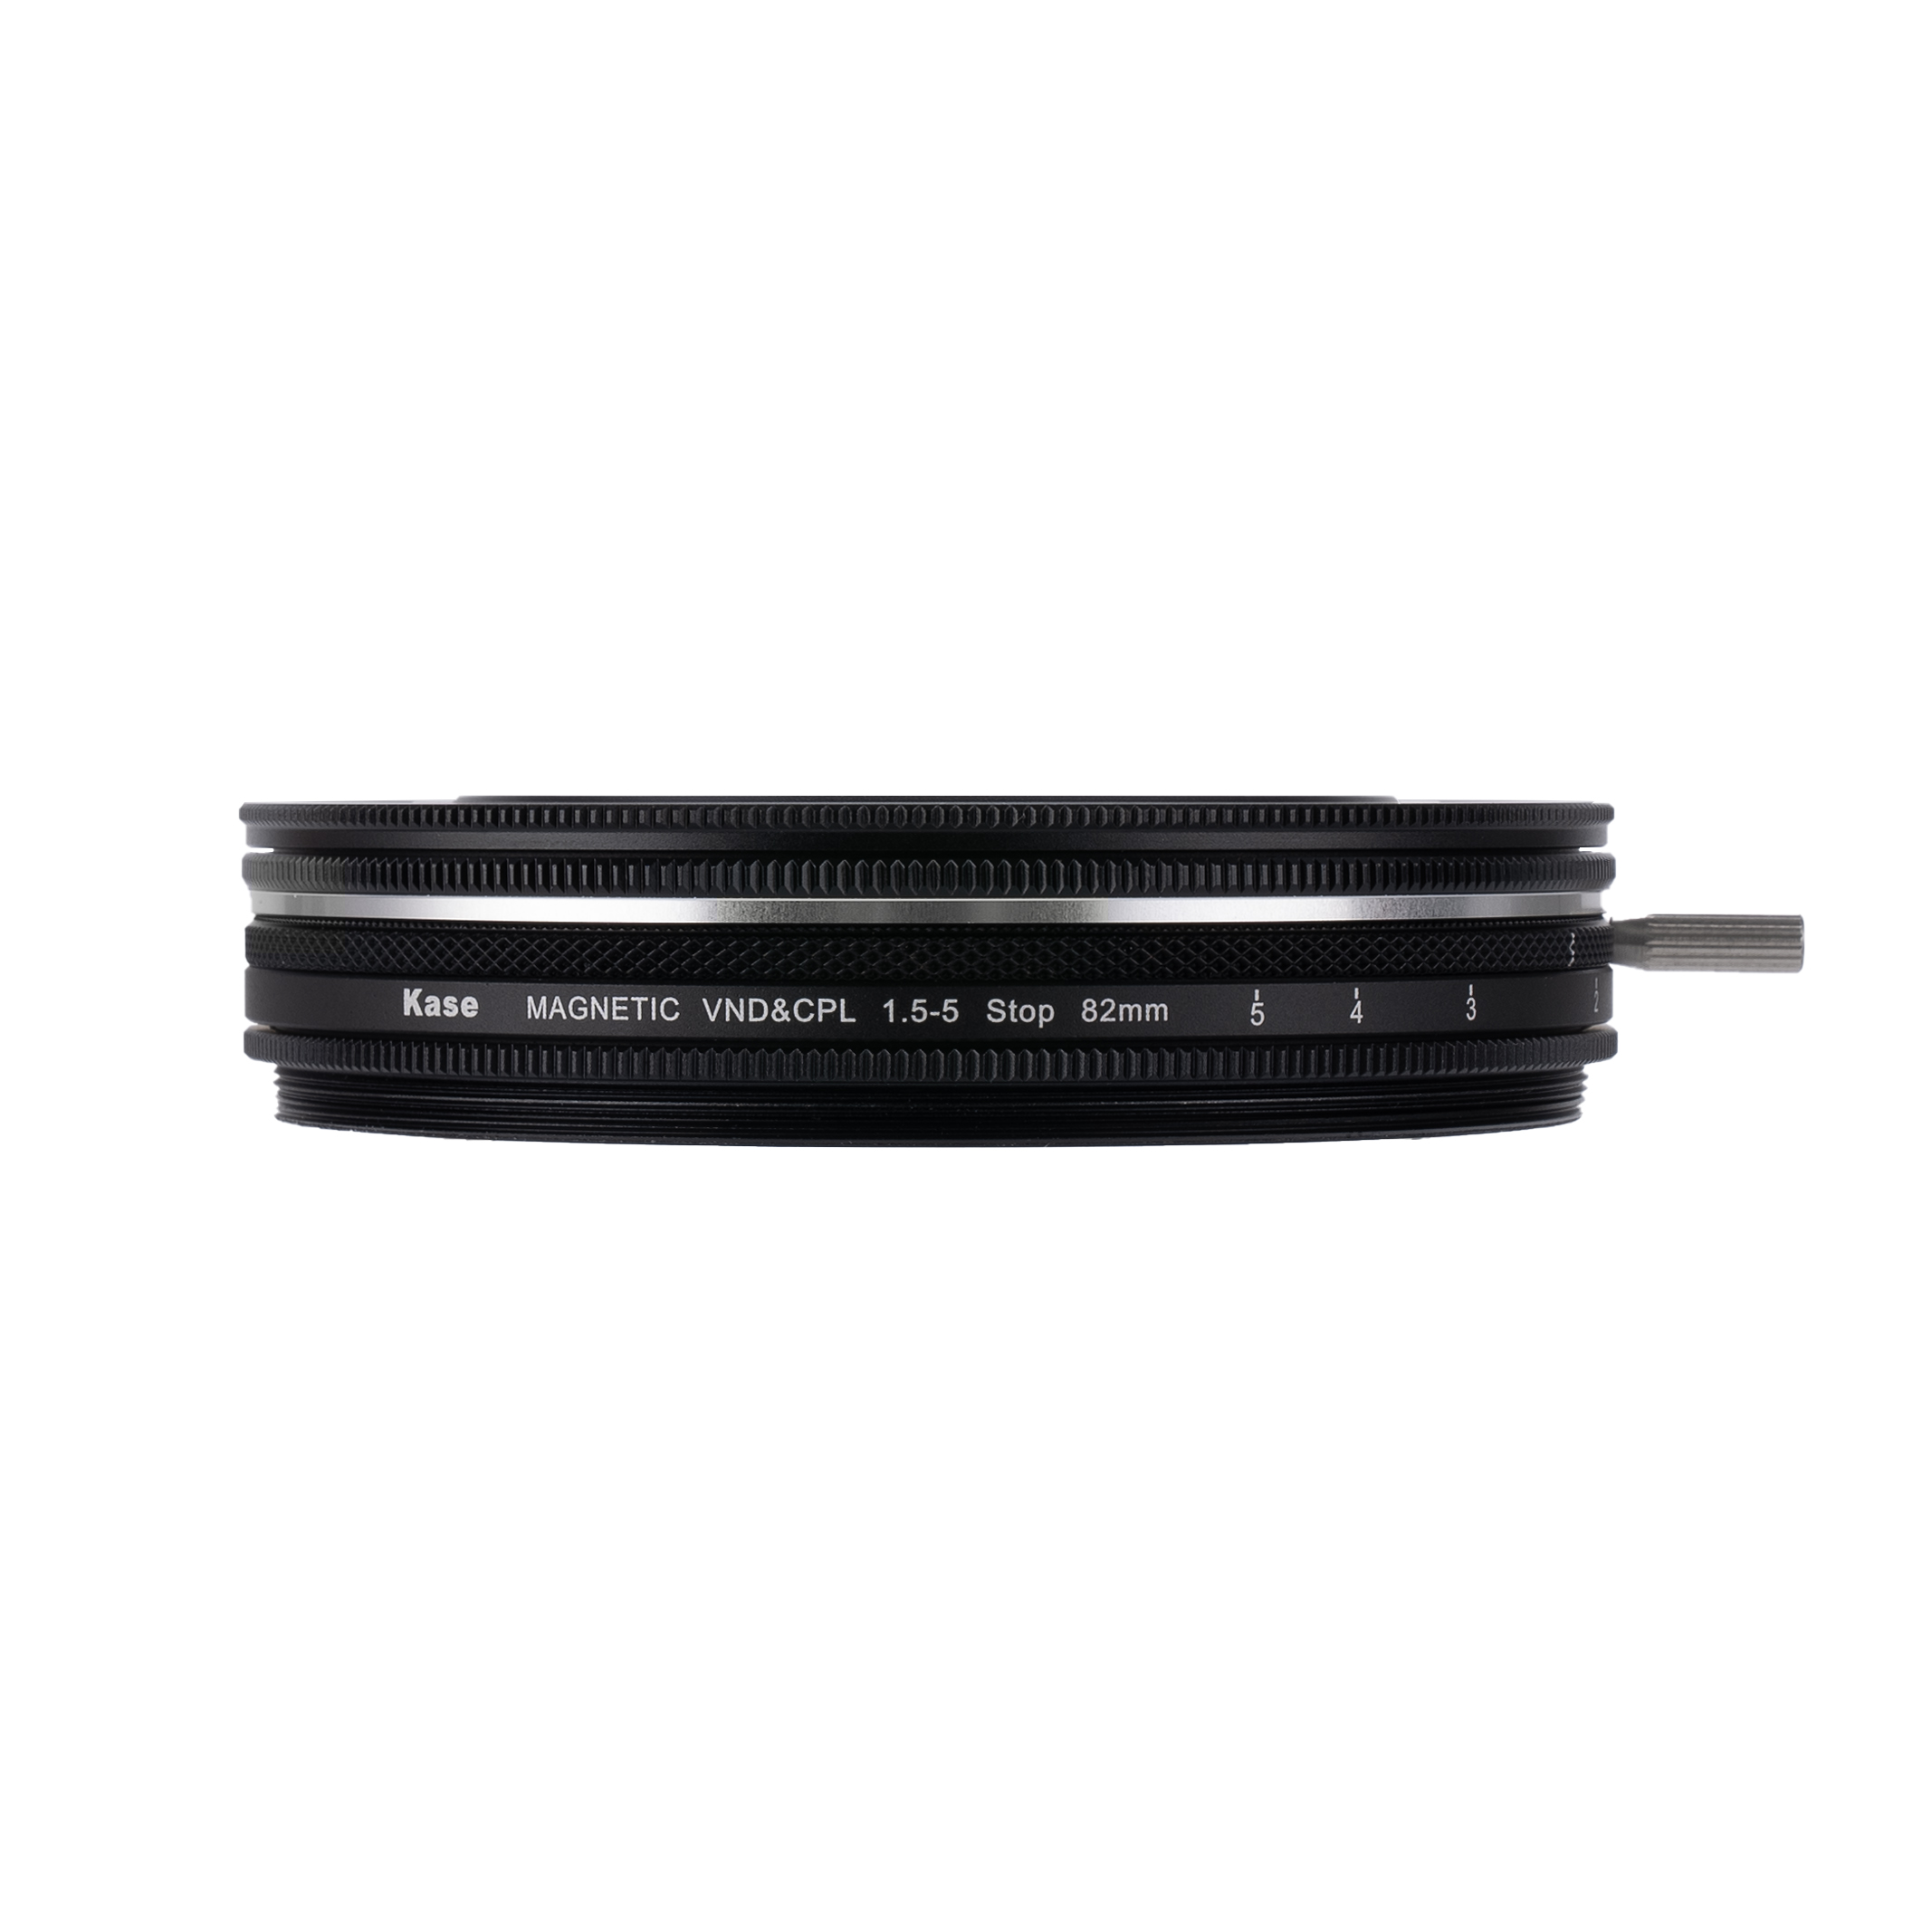 Kase Magnetic Video Kit Revolution Video Series with VND-CPL Filters & Black mist/ White mist filter 77/82mm